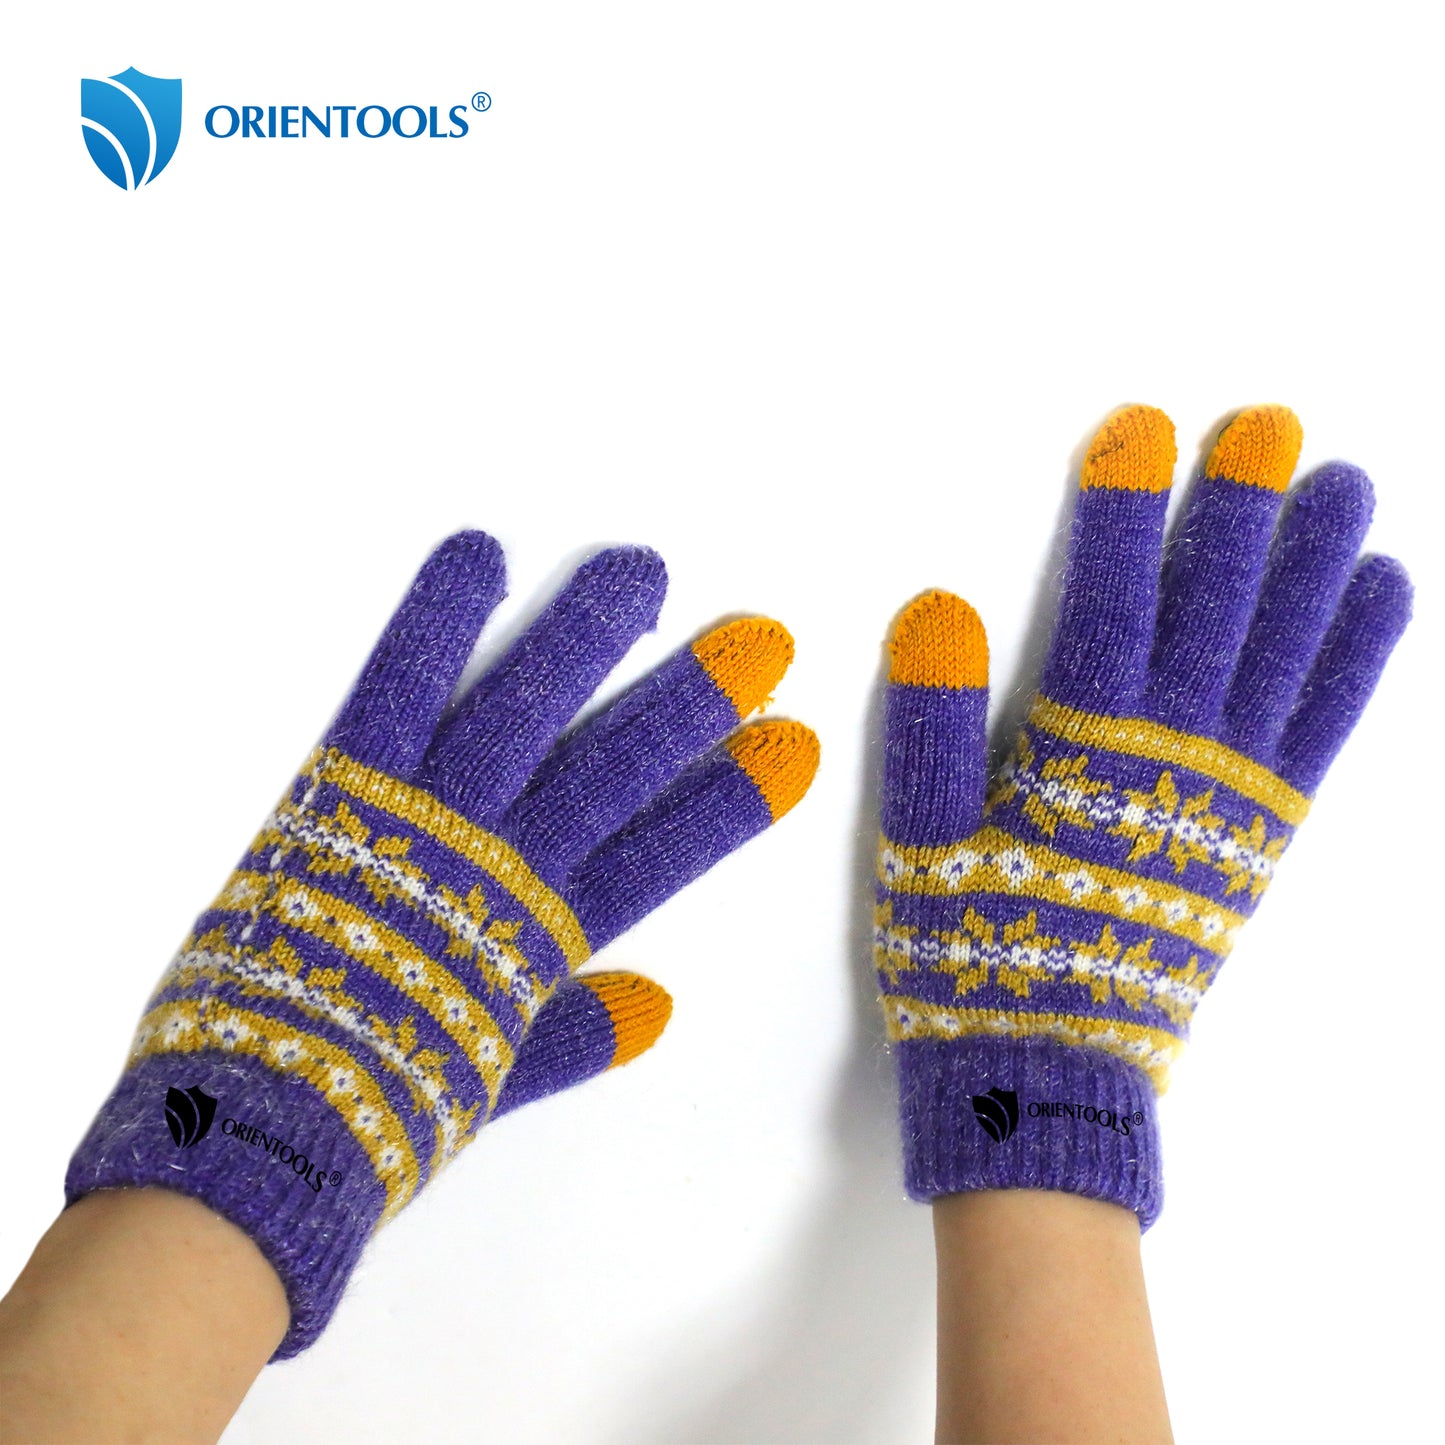 Winter wool gloves